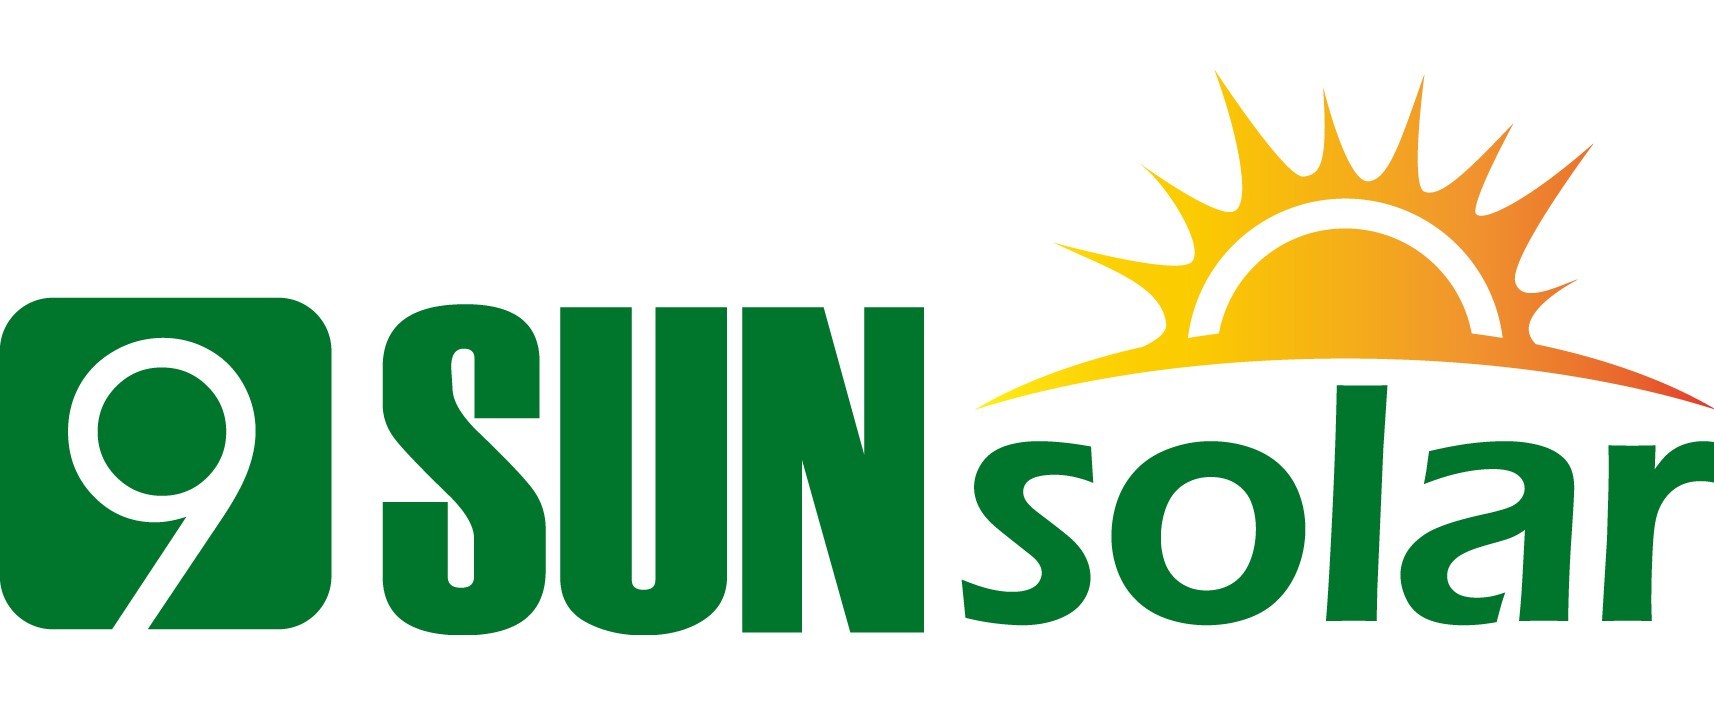 Xiamen 9Sun Solar Technology Co., Ltd